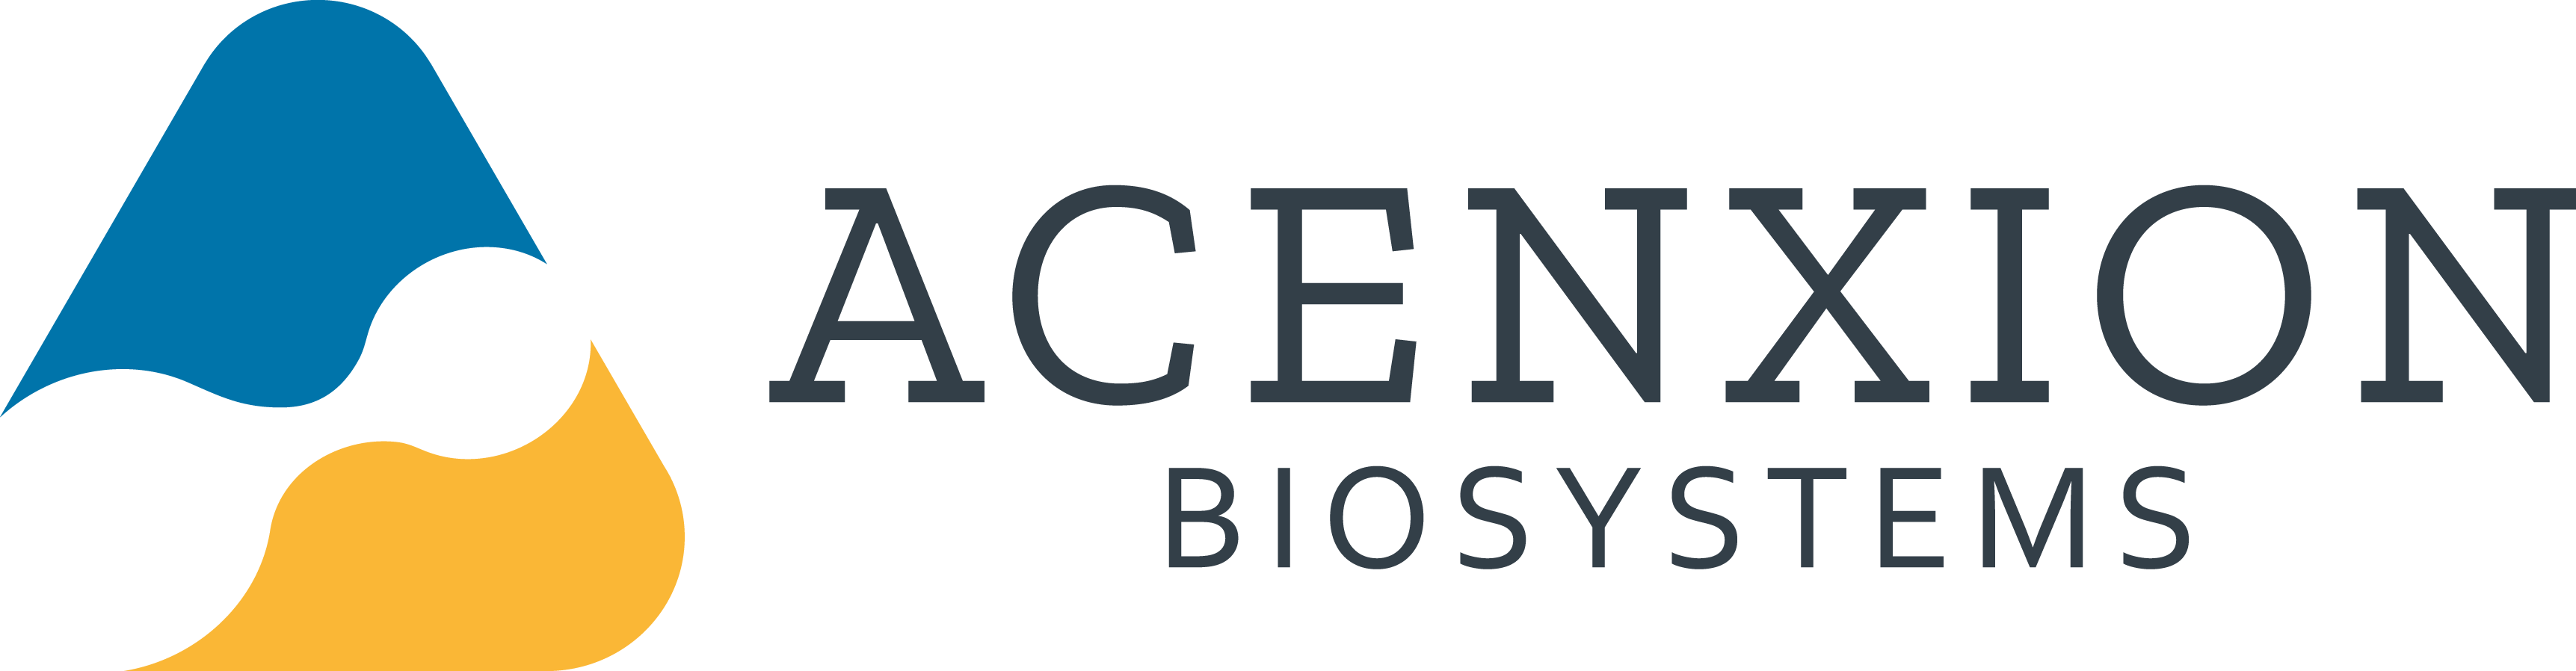 Acenxion Biosystems